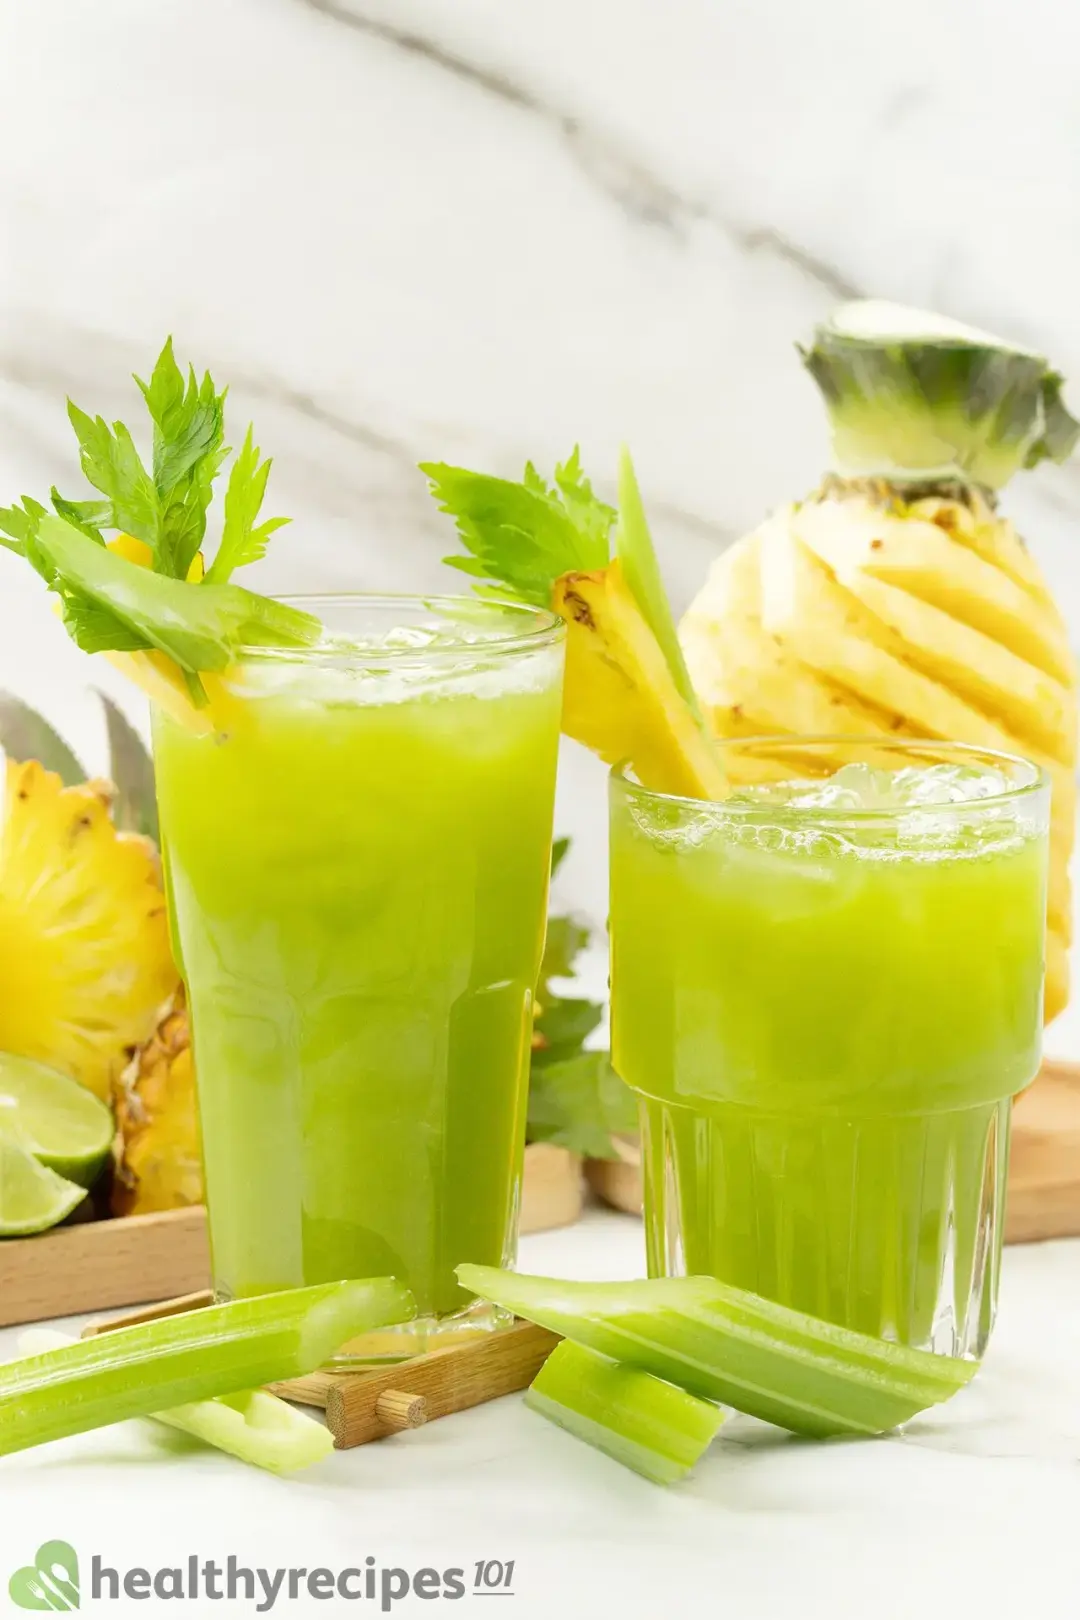 how long does pineapple celery juice last